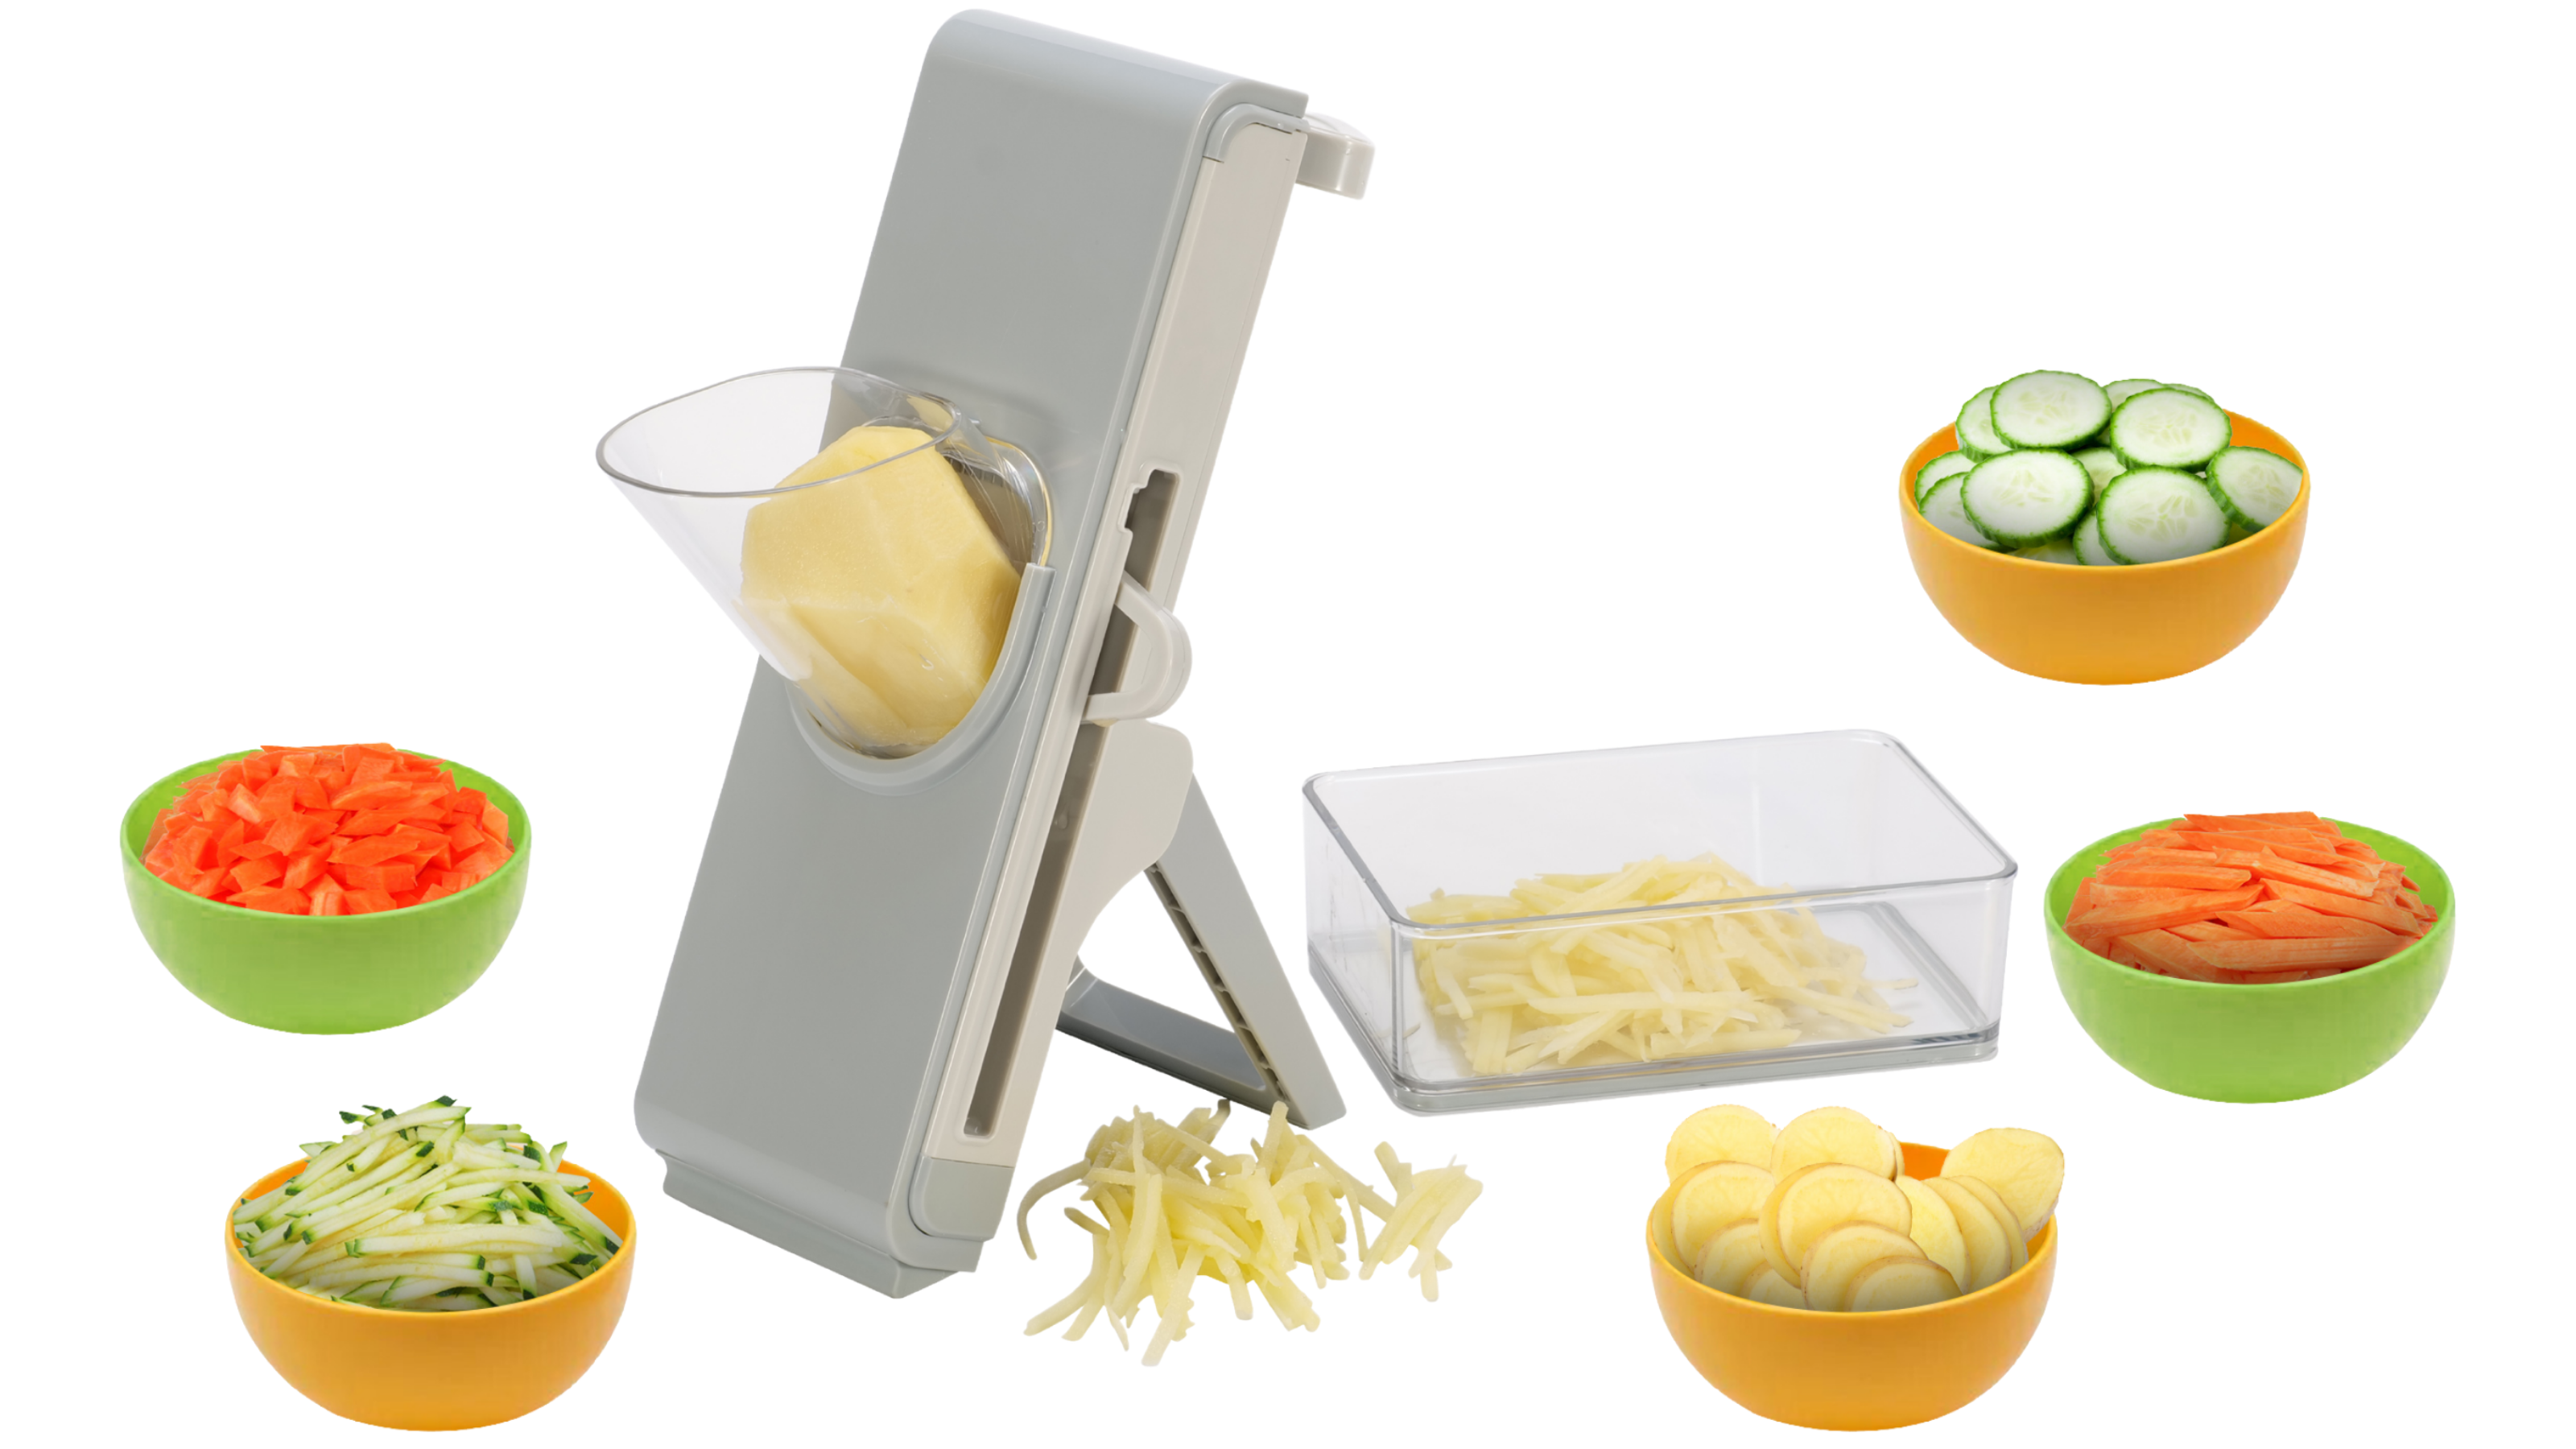 Brieftons Manual Food Chopper, Compact & Powerful Hand Pull Chopper Blender  to Chop Onion, Garlic, Vegetables, Fruits, Herbs for Salsa, Salad, Pesto